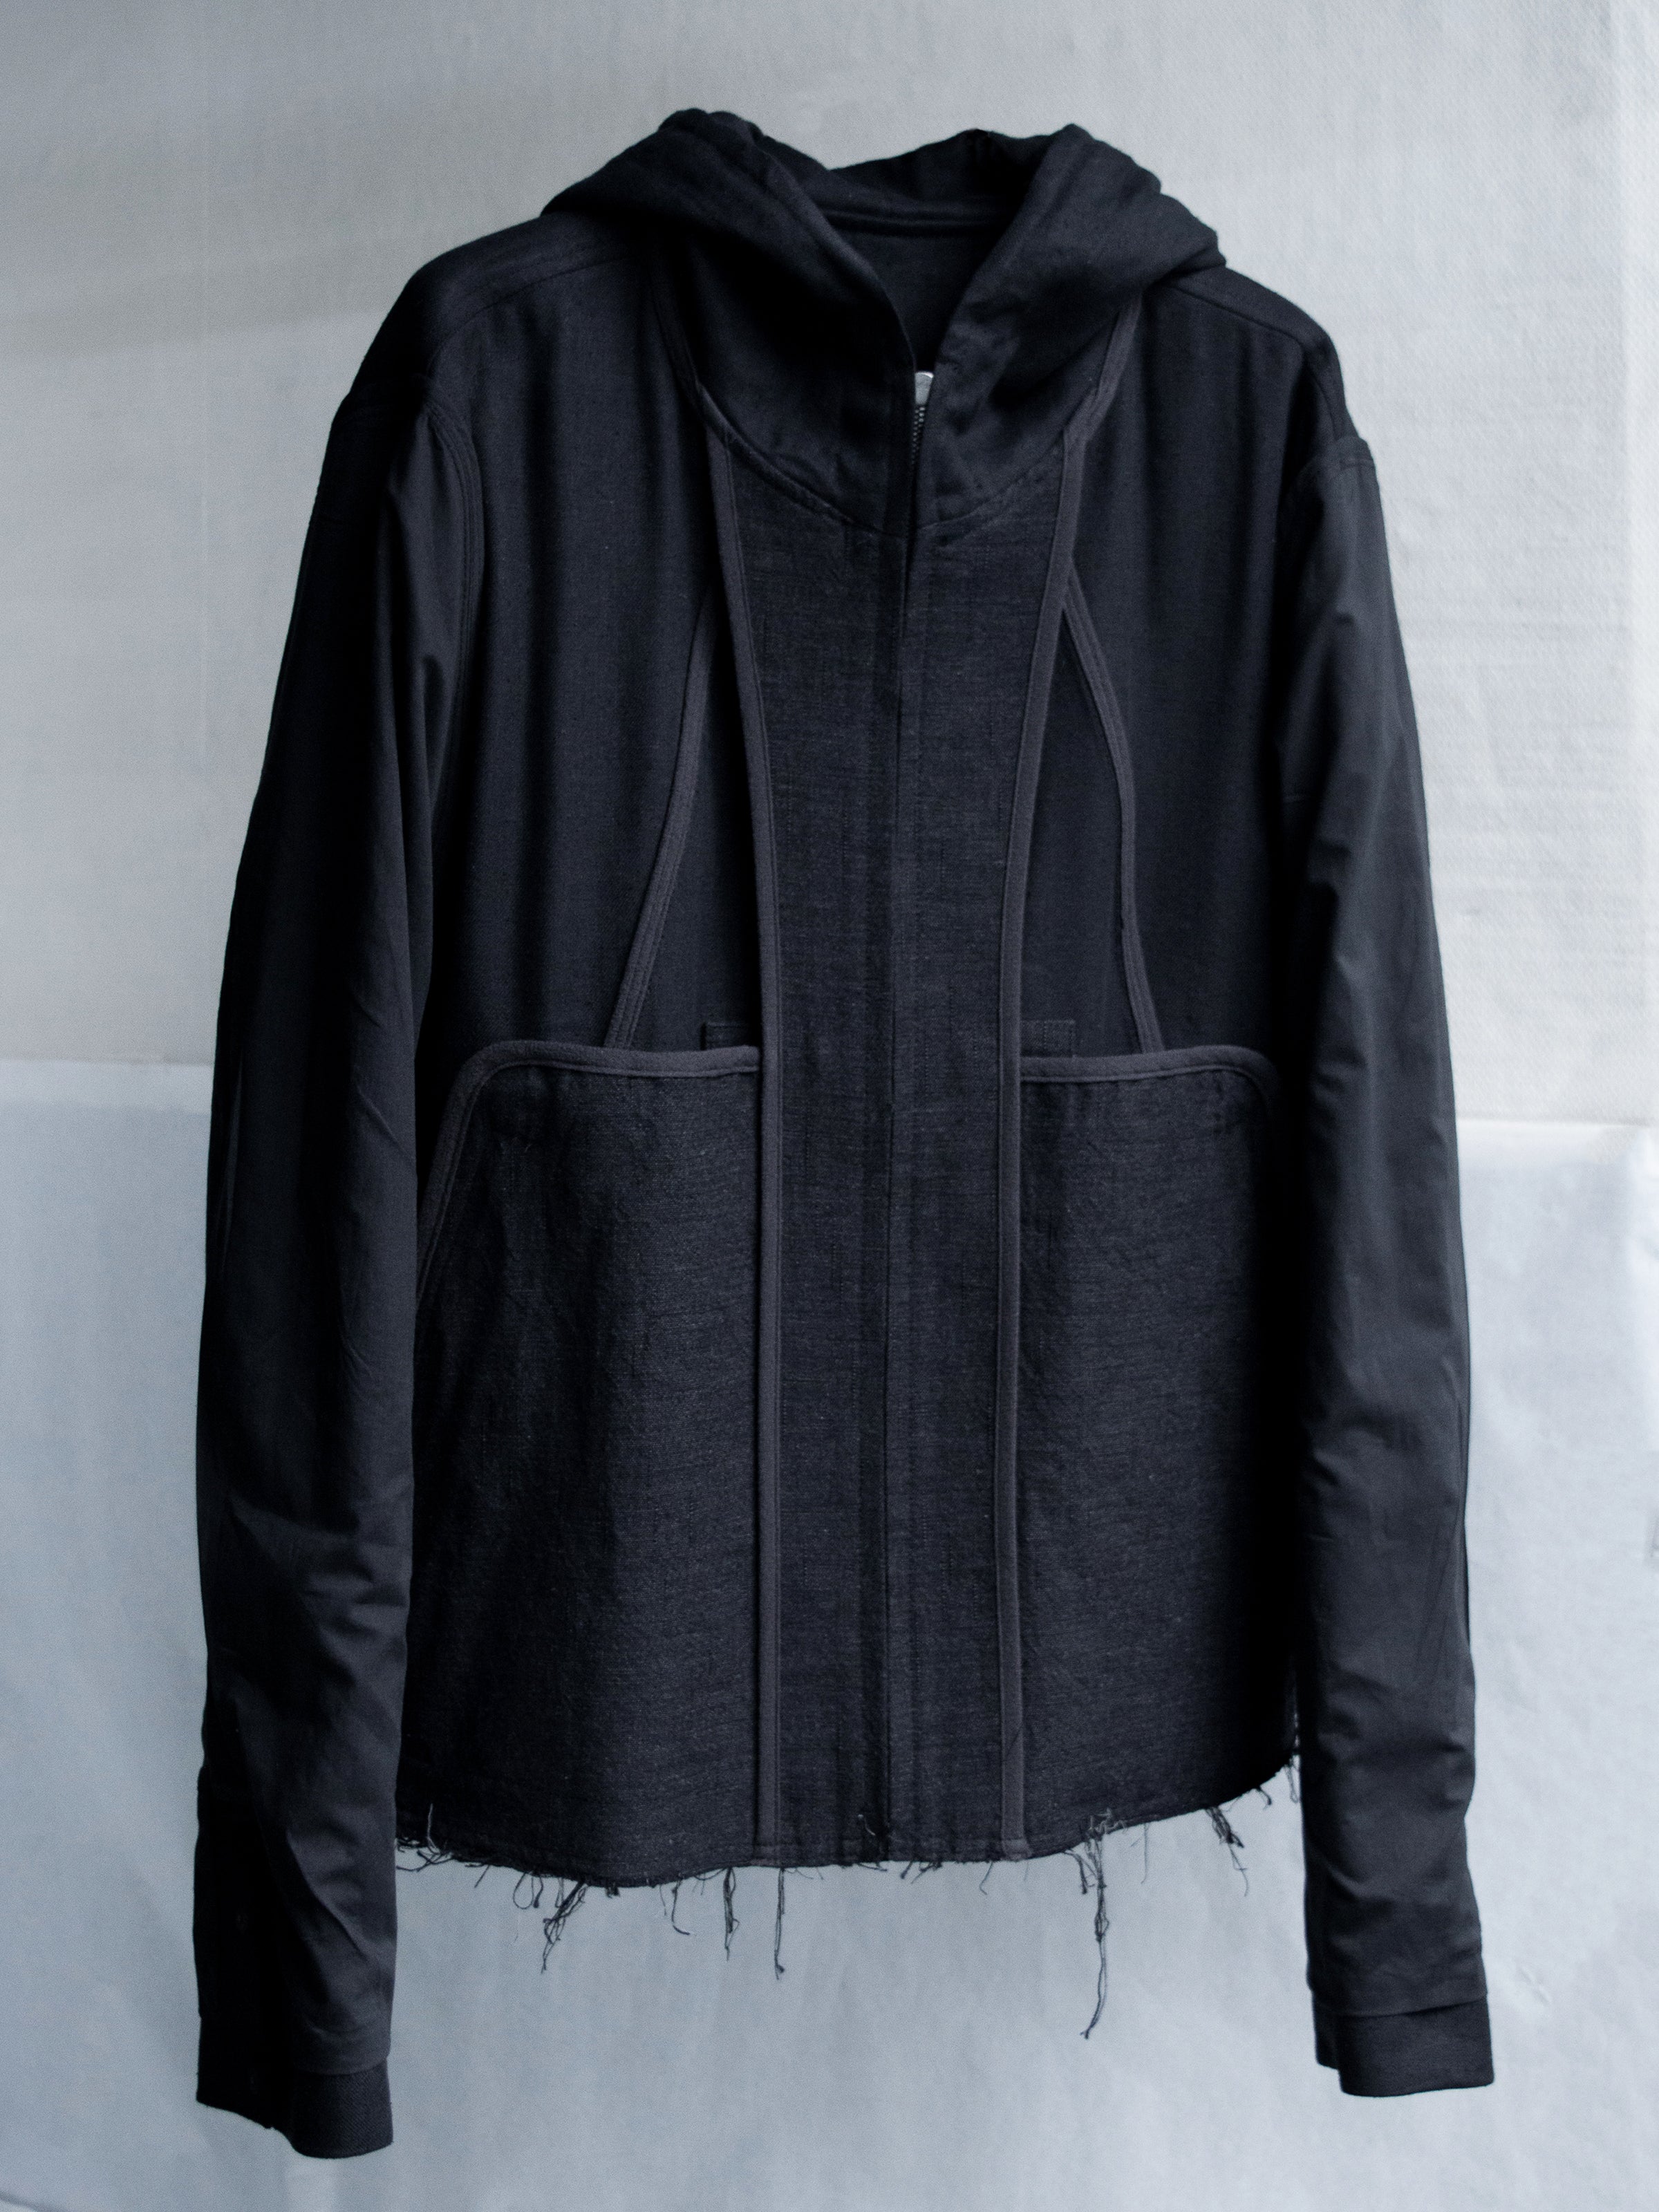 hooded jacket / double black